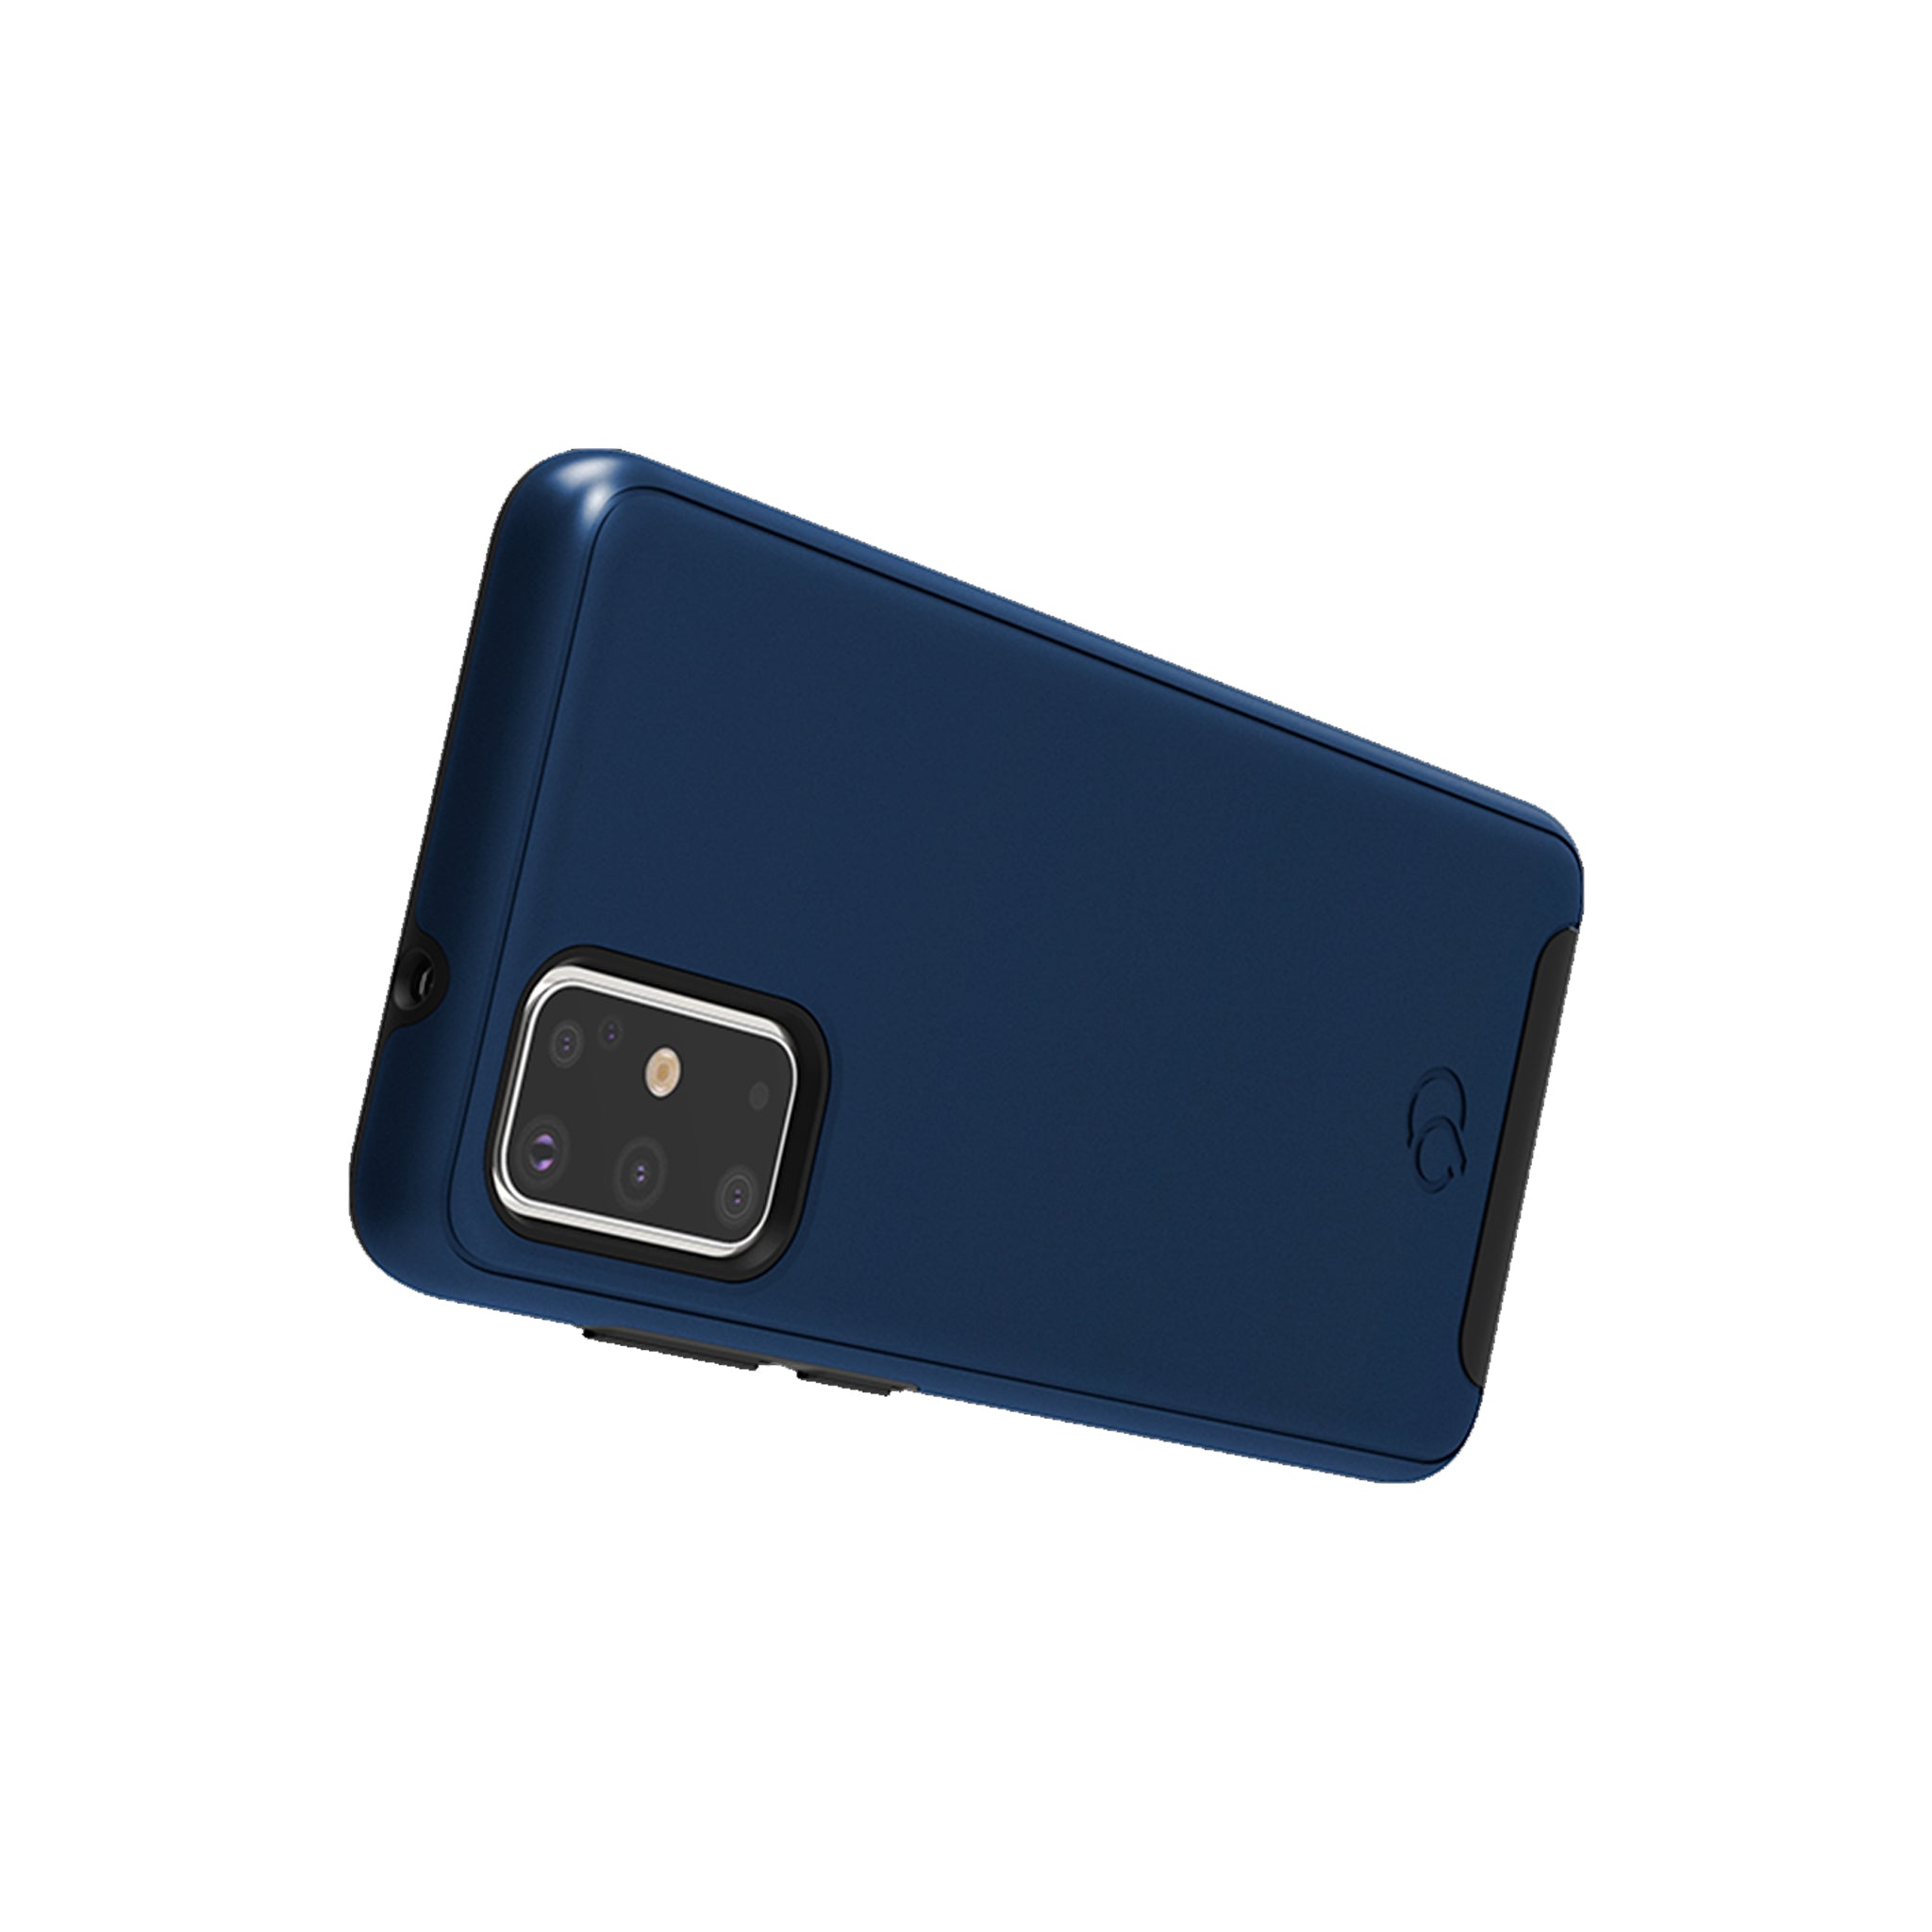 Nimbus9 - Cirrus 2 Case For Samsung Galaxy S20 Plus - Midnight Blue